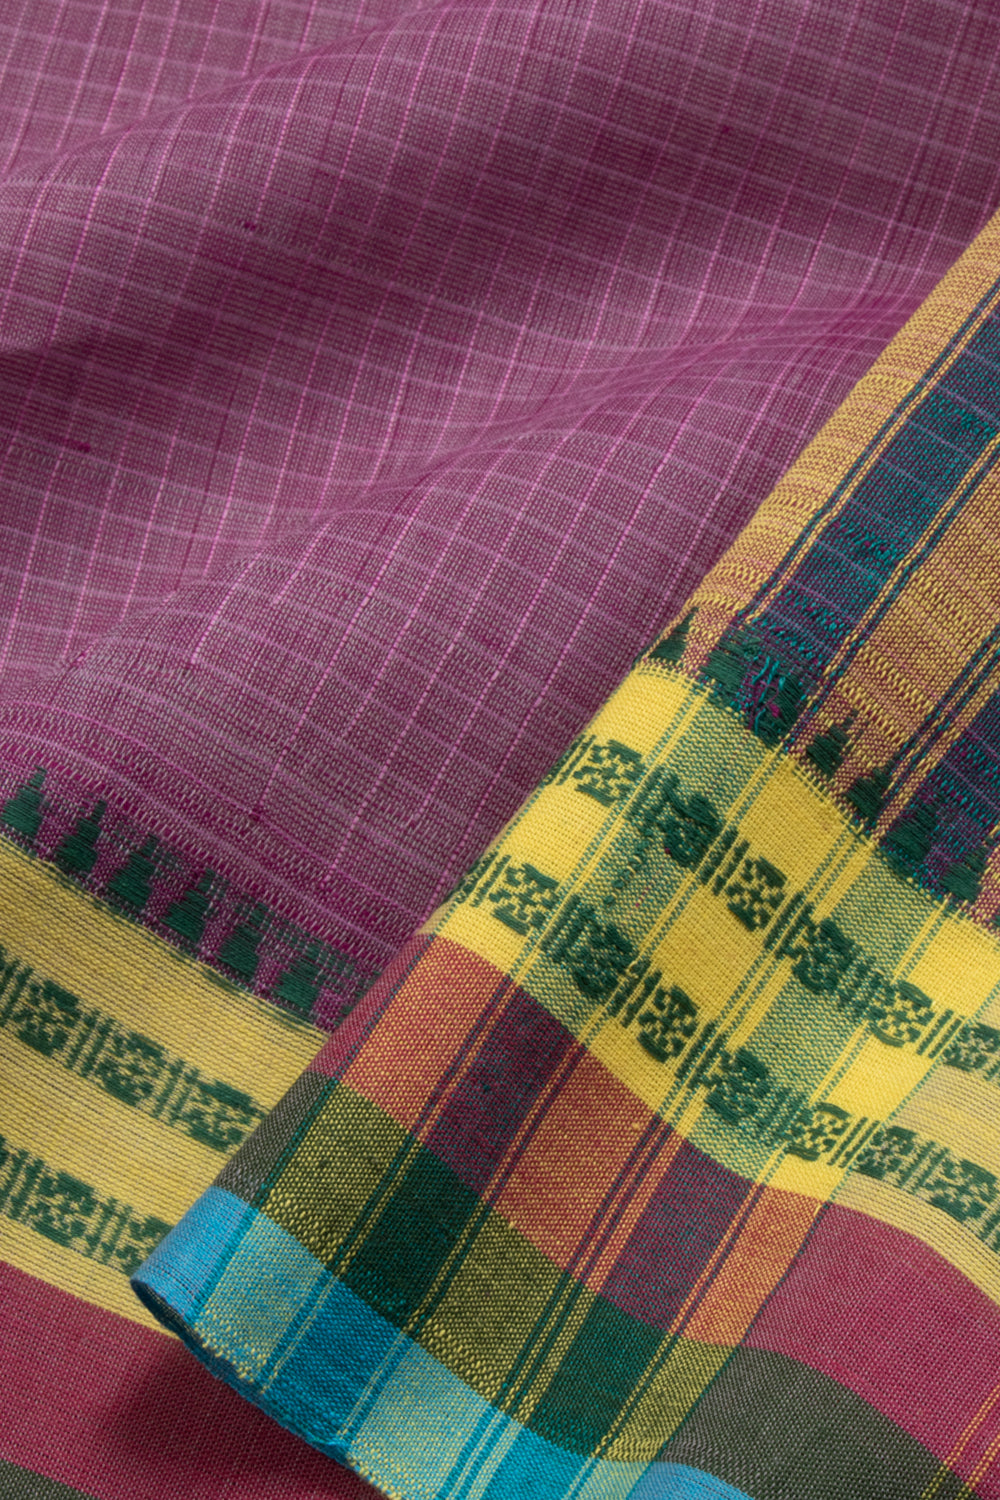 Violet Handloom Narayanpet Cotton Saree Without Blouse 10064373 - Avishya